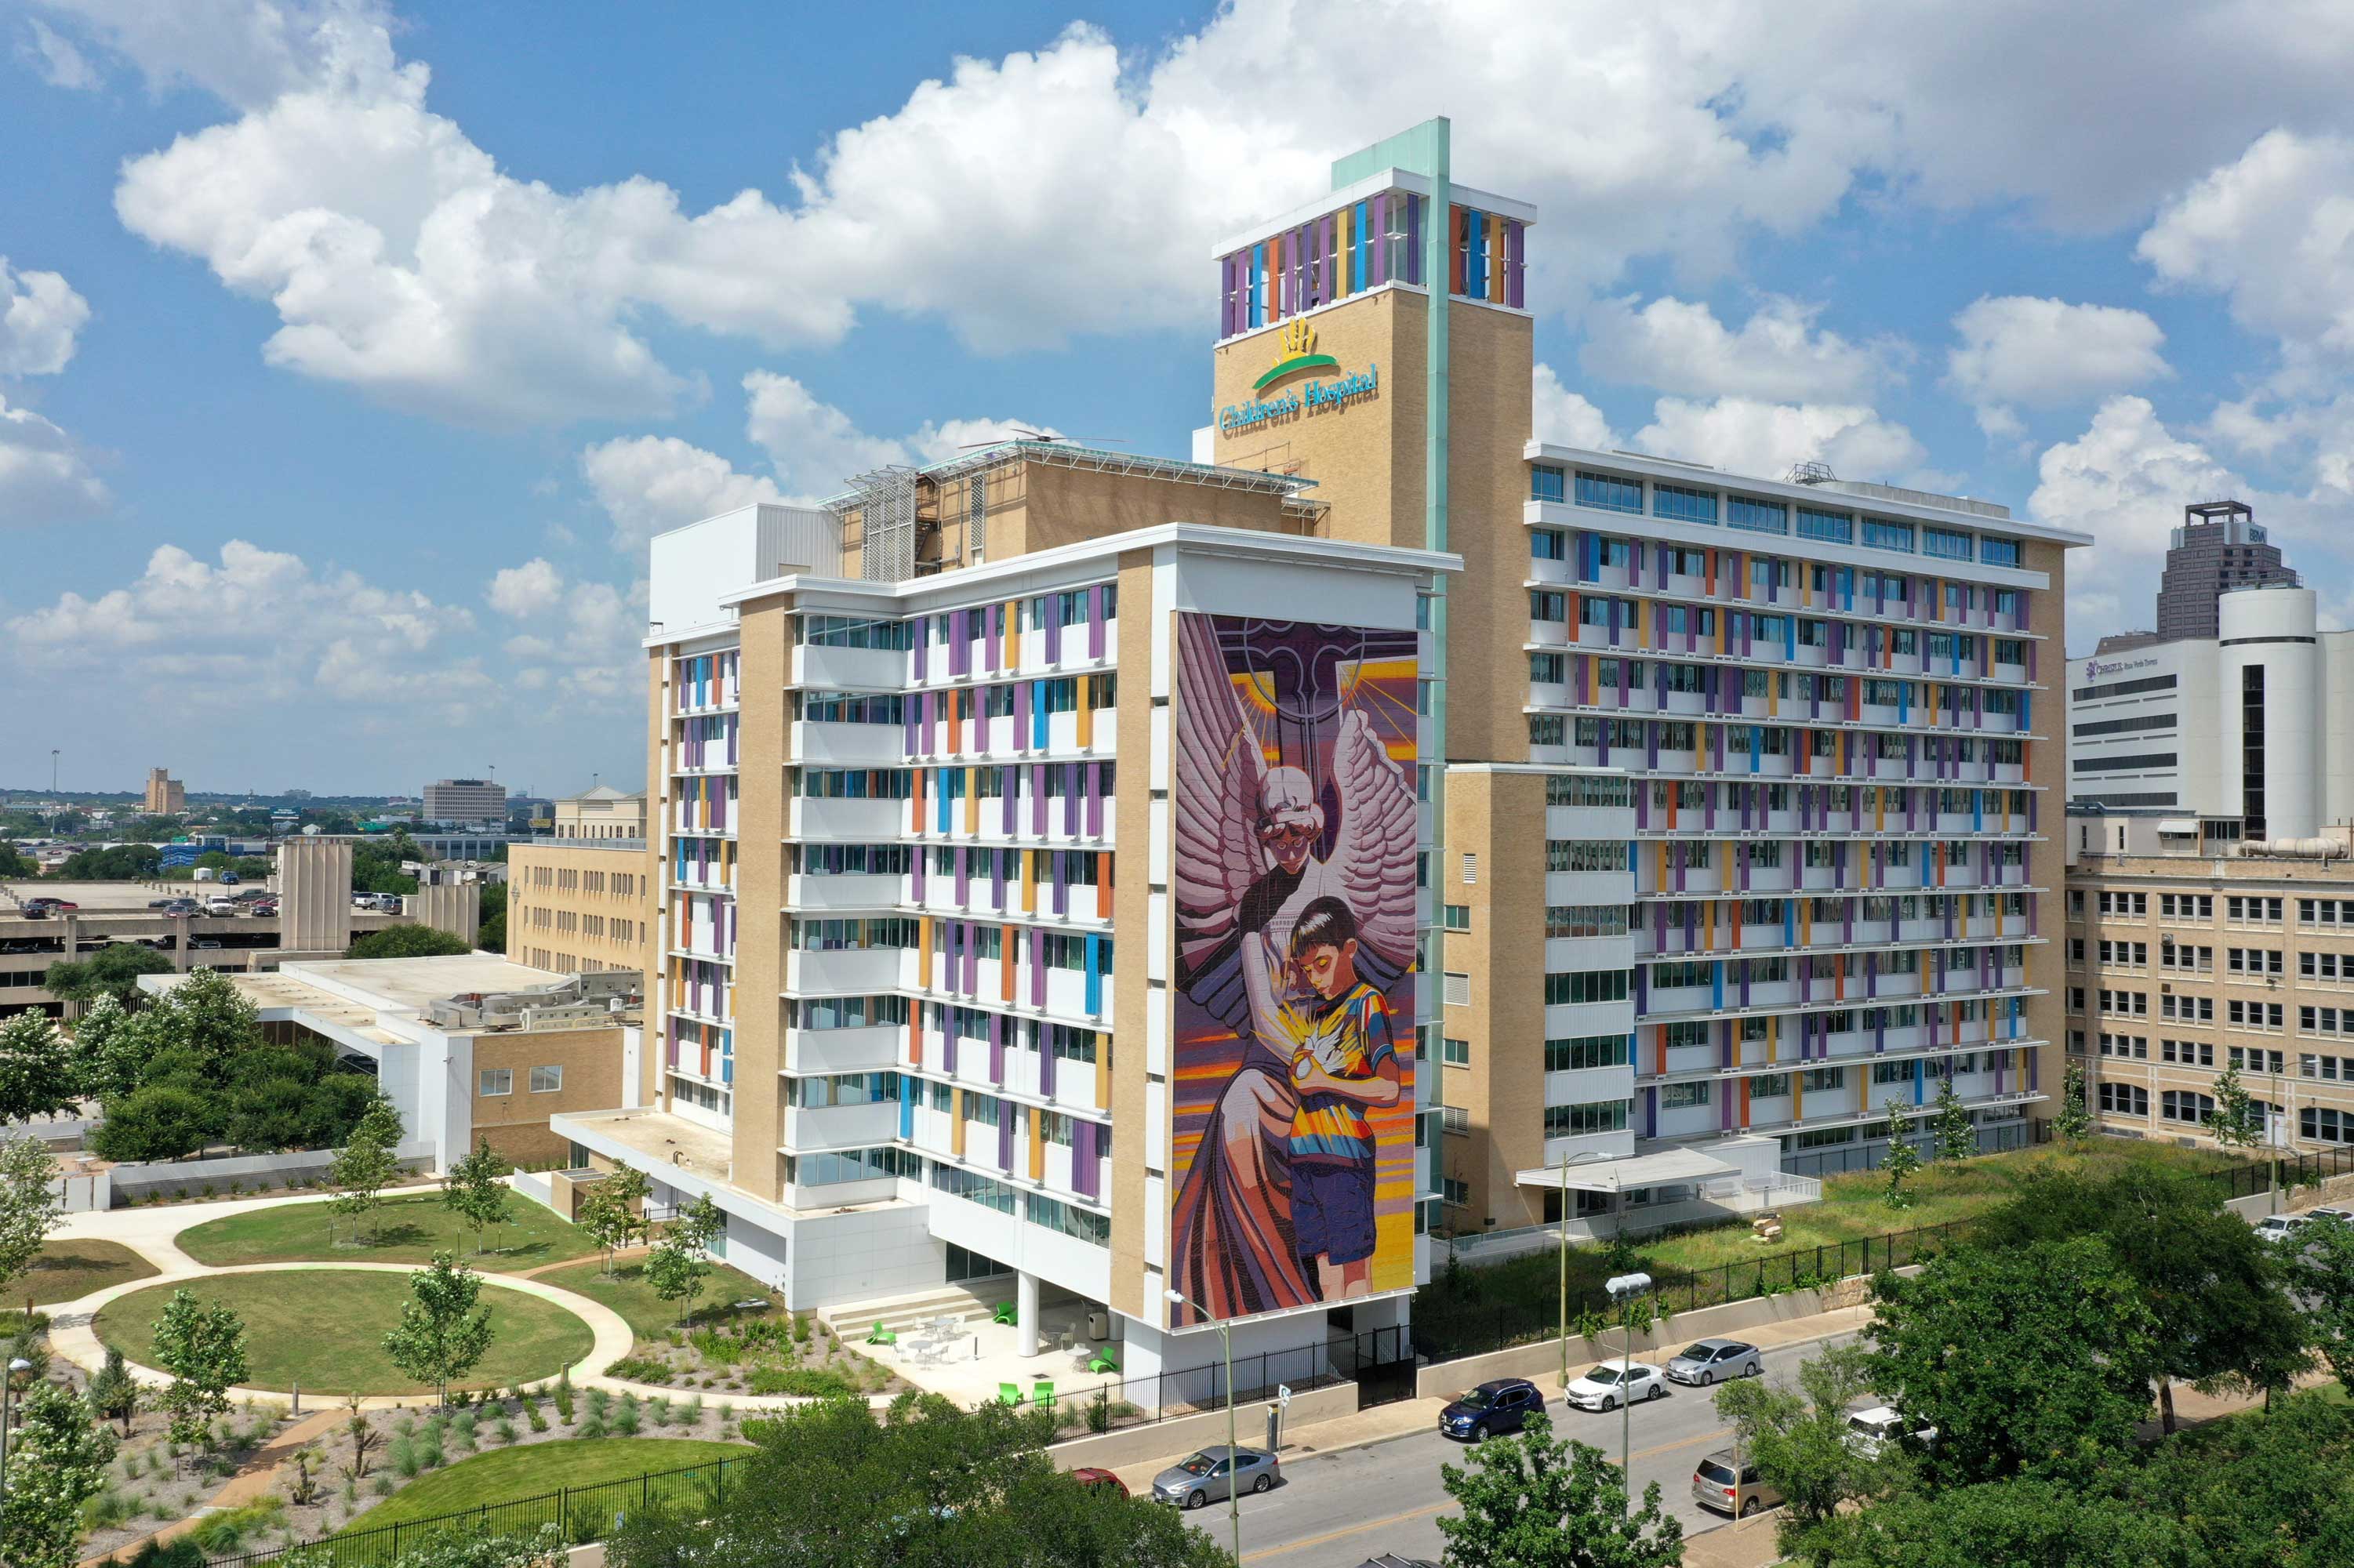 Children's Hospital of San Antonio